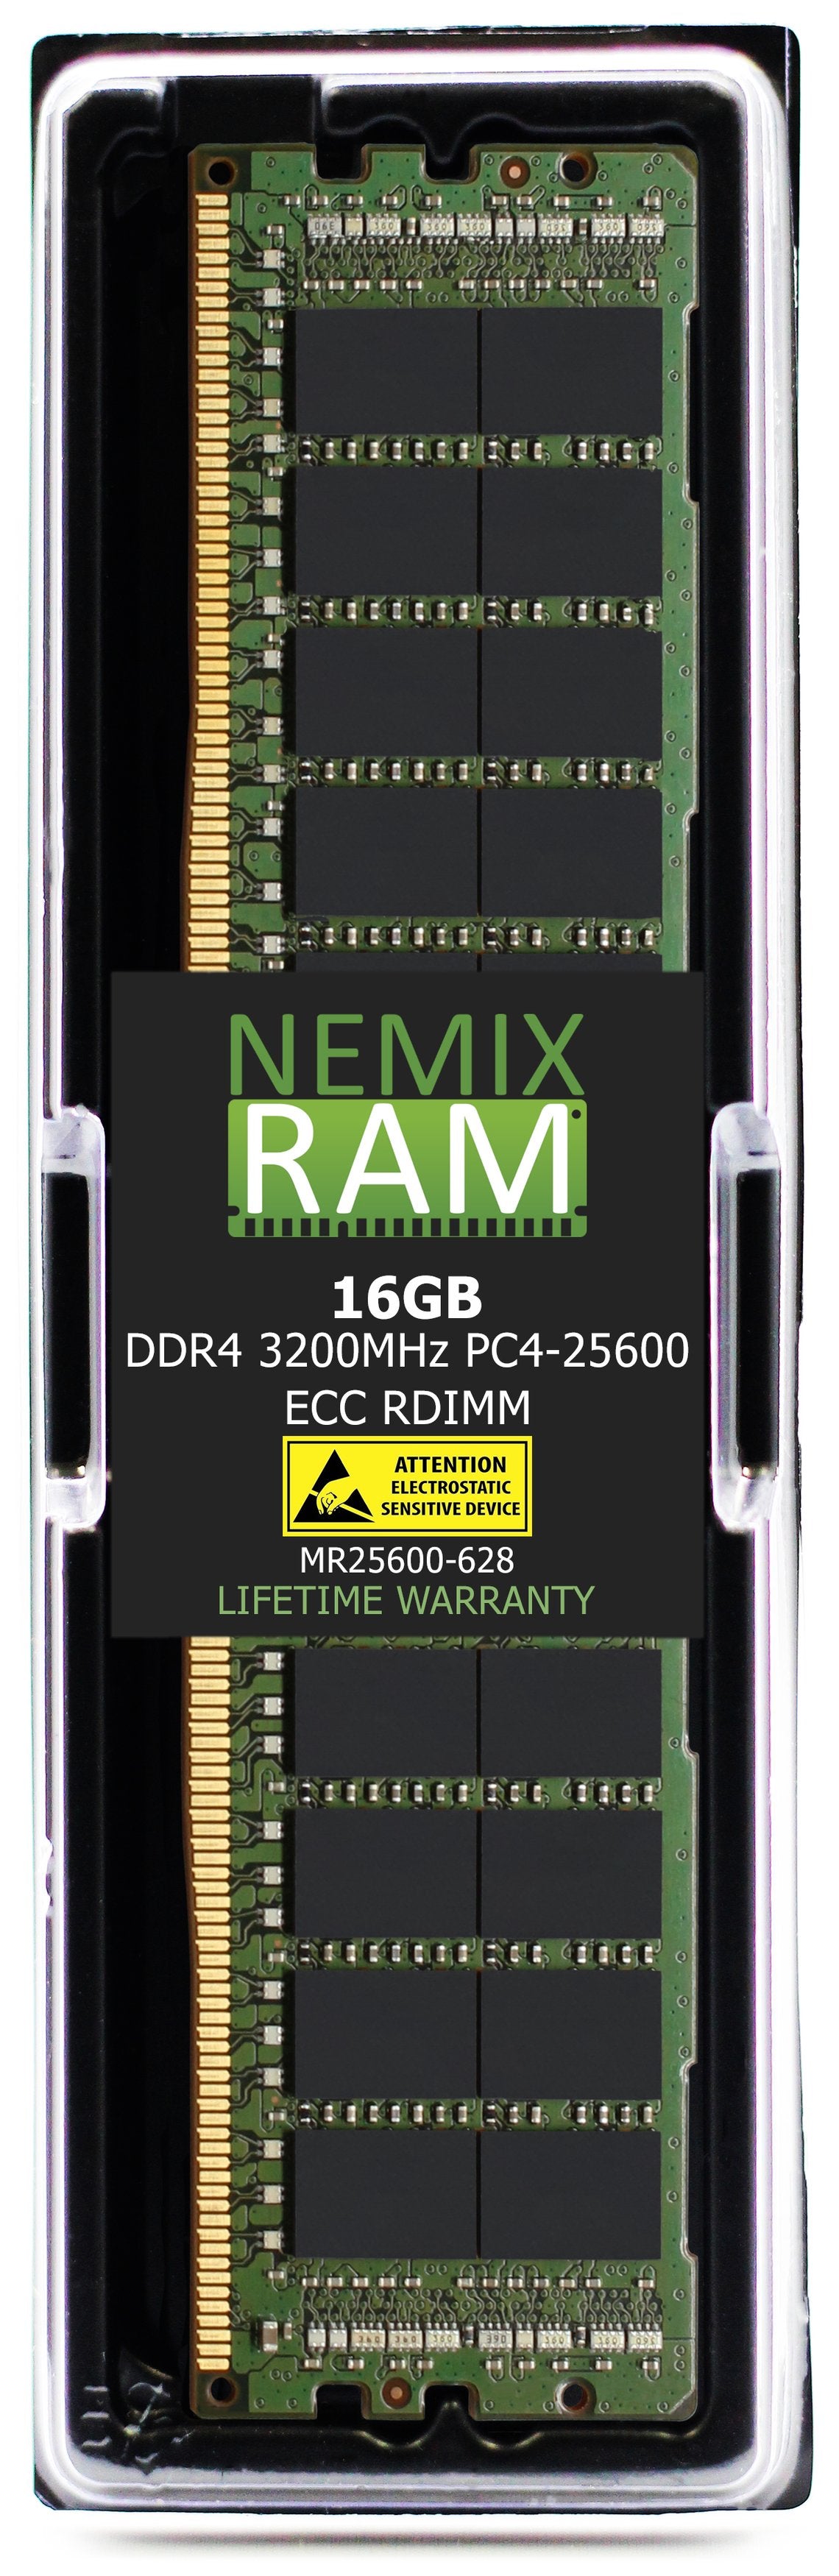 16GB DDR4 3200MHZ PC4-25600 RDIMM Compatible with Supermicro MEM-DR416L-HL01-ER32